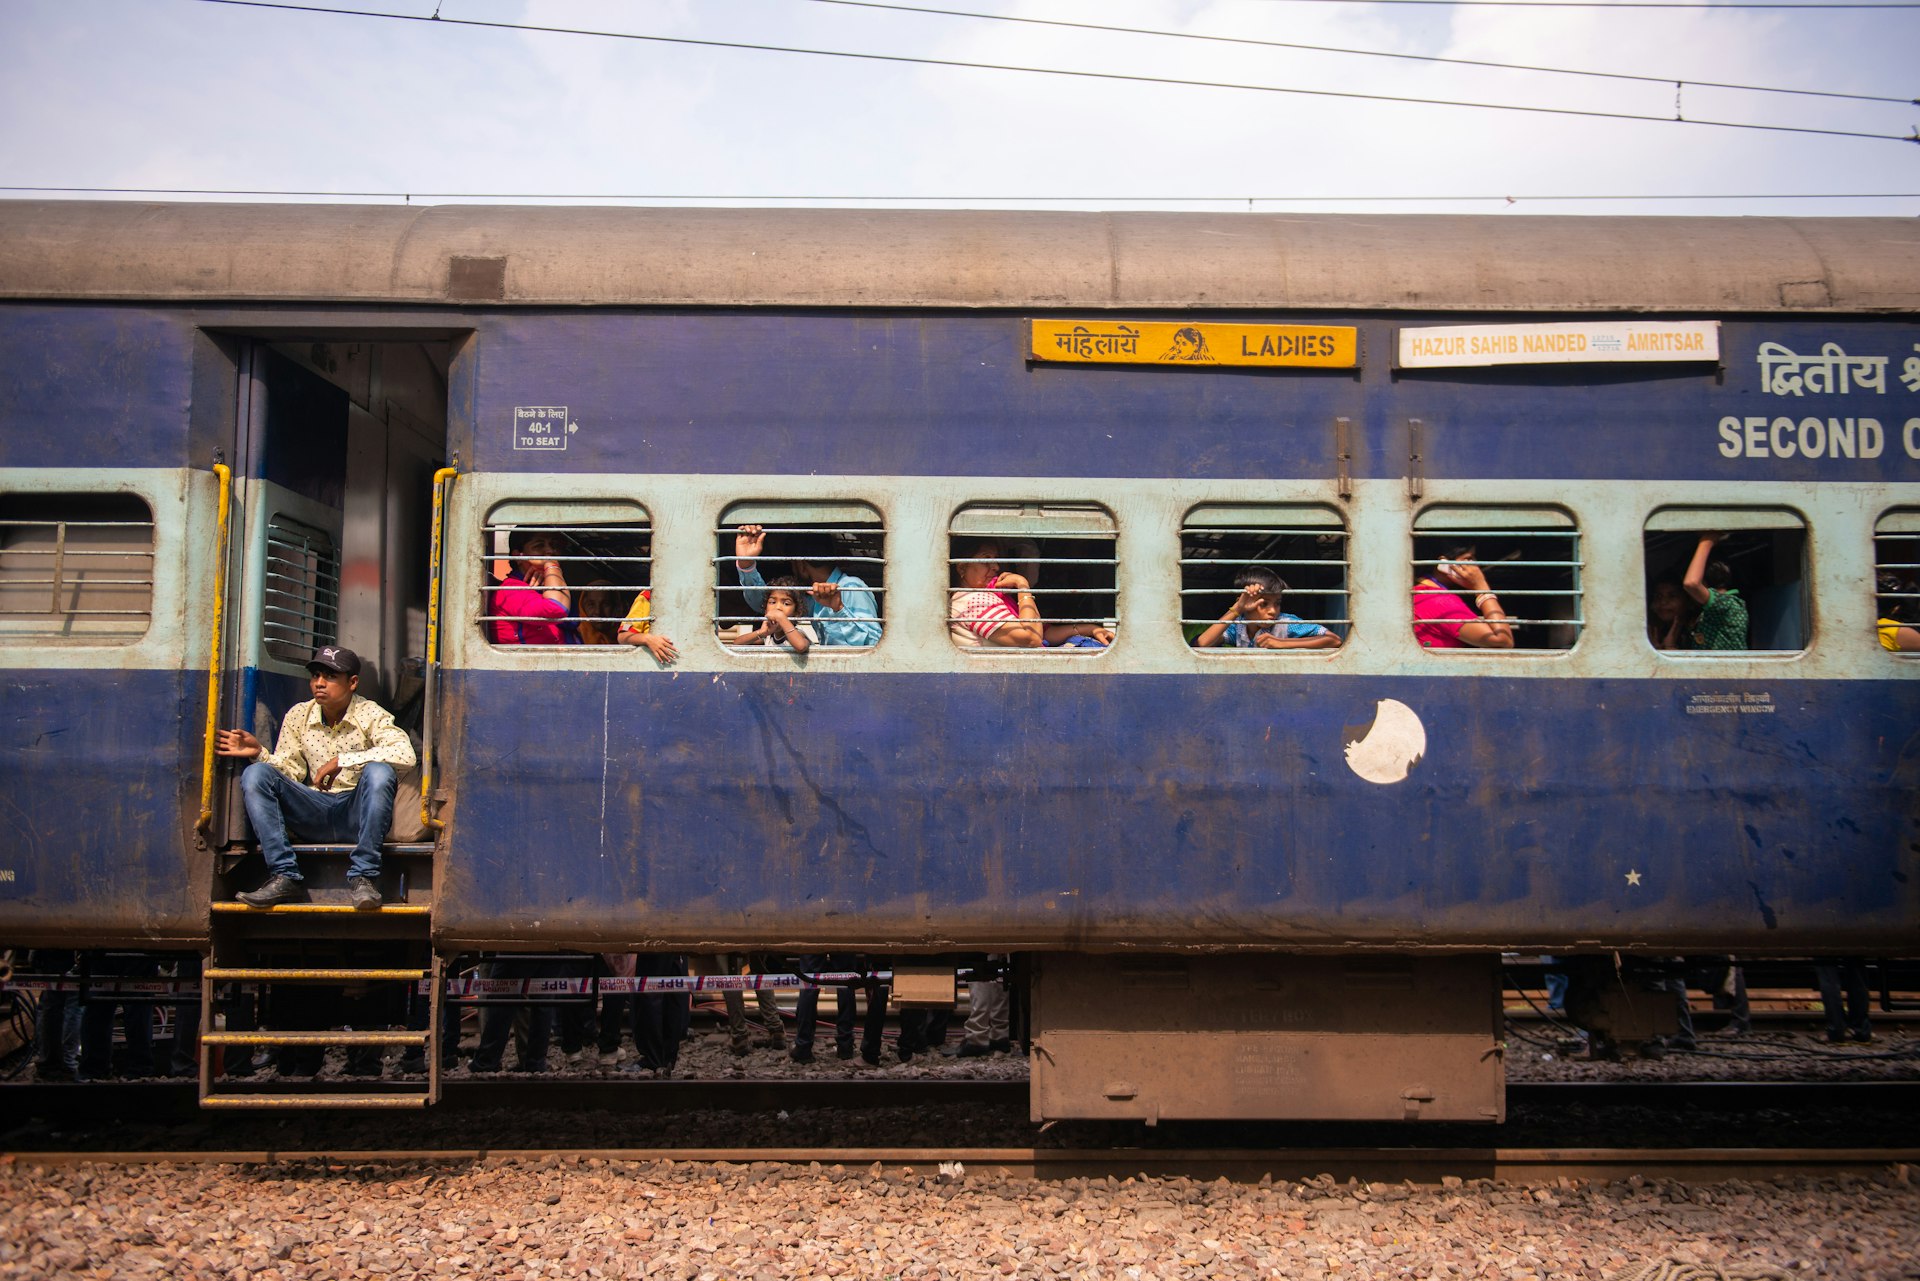 A women’s coach of a passenger train in New Delhi, India